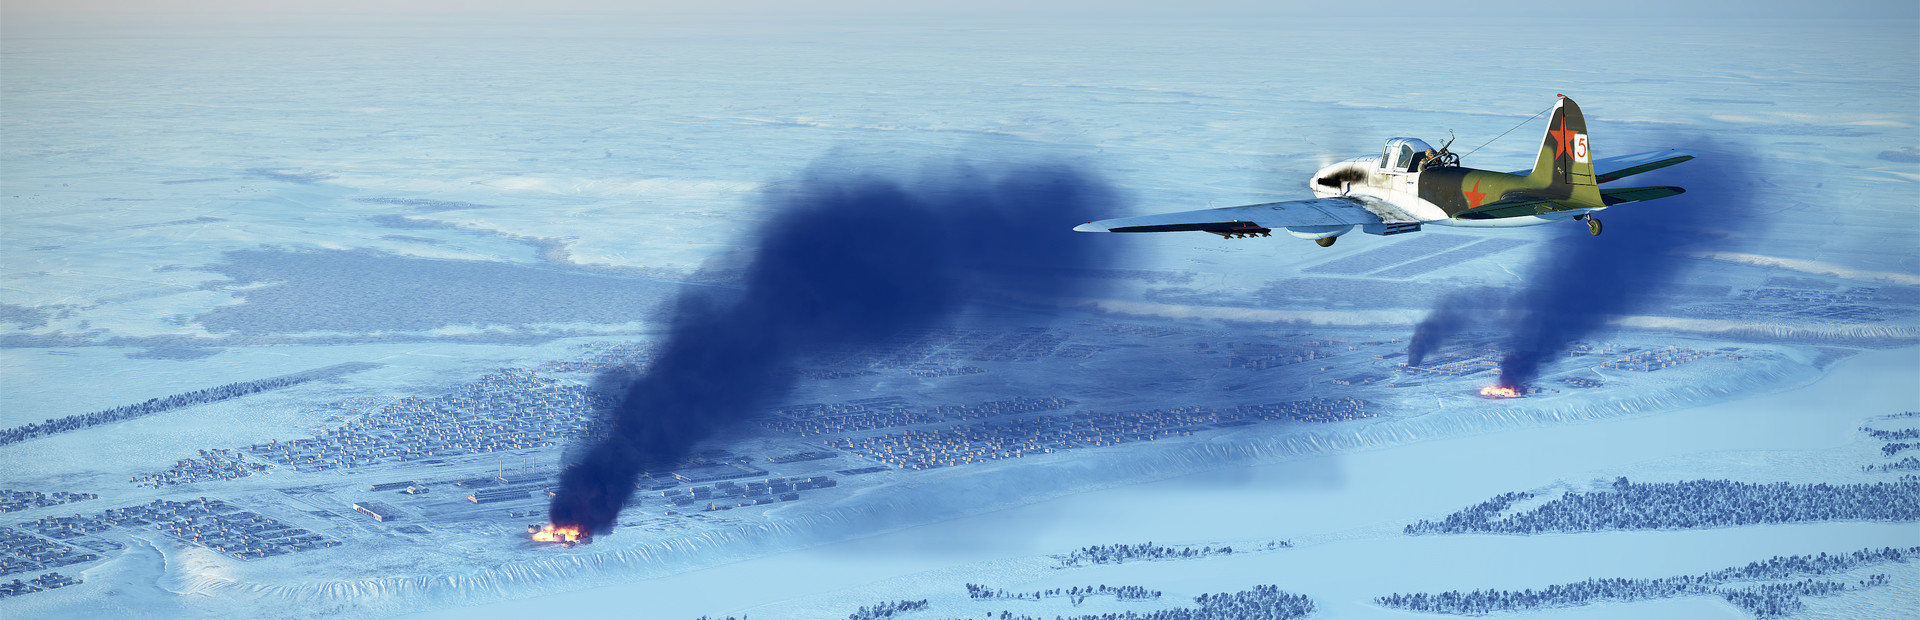 IL-2 Sturmovik: Battle of Stalingrad cover image